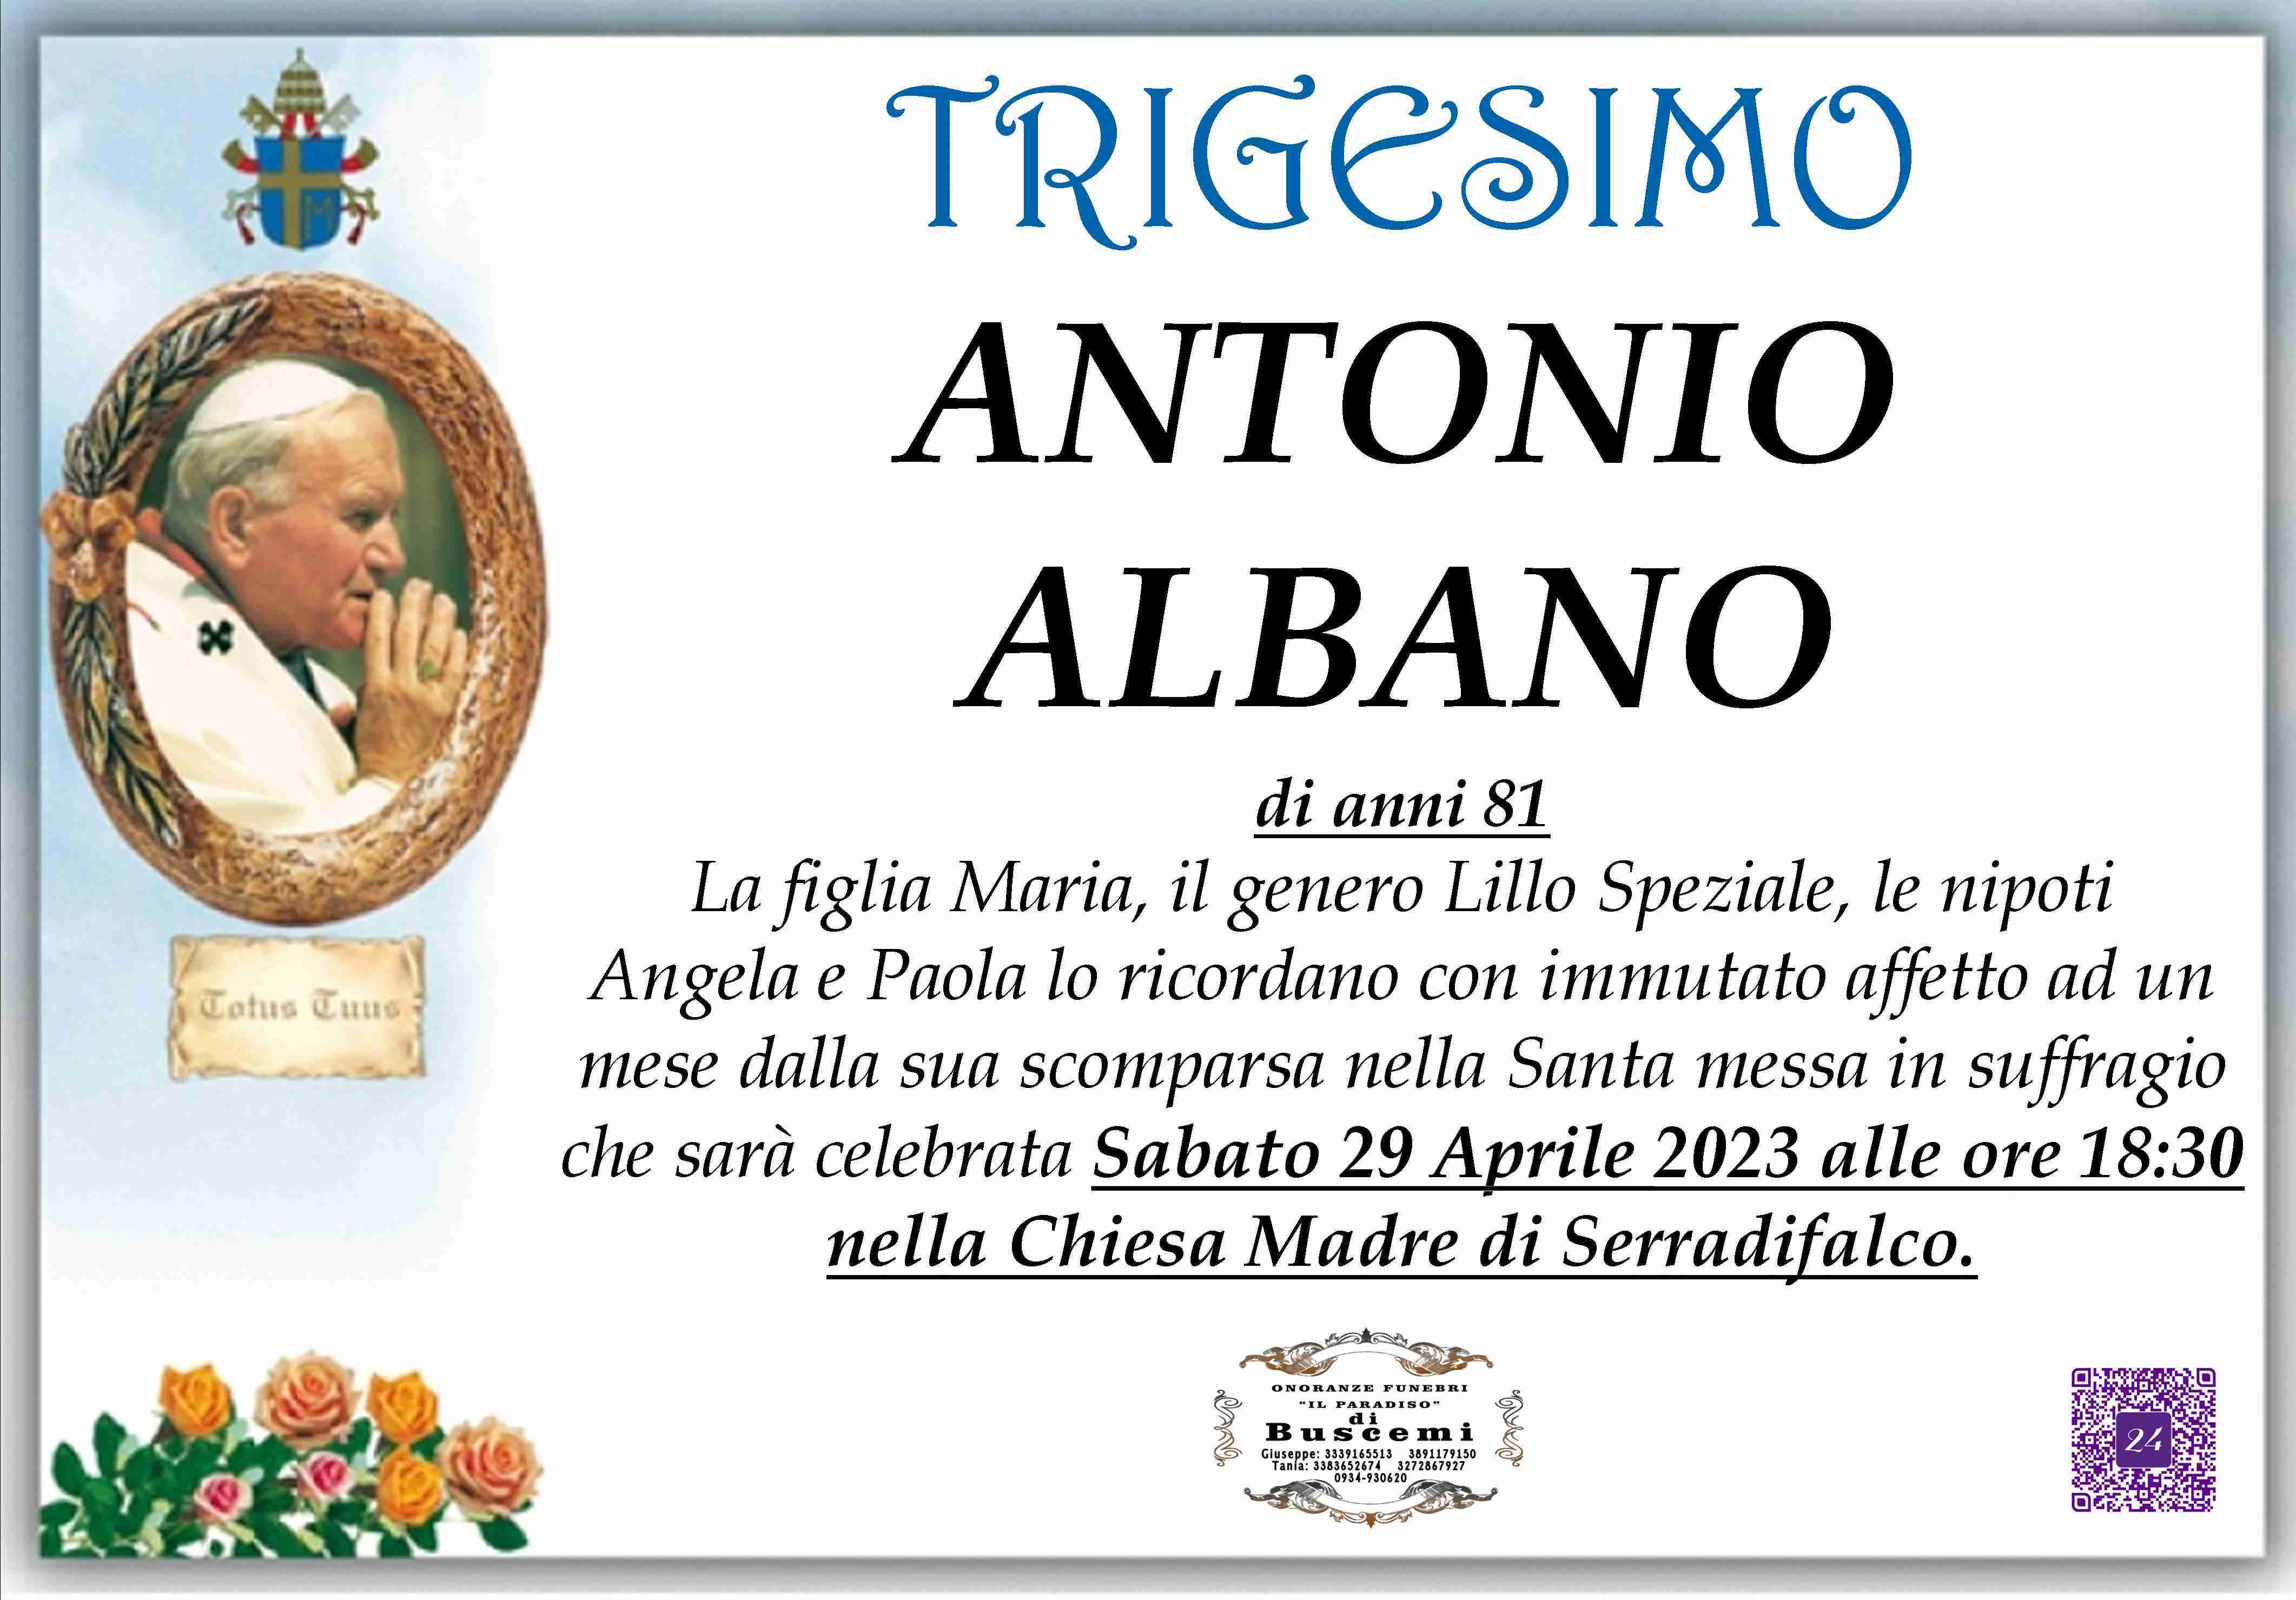 Antonio Albano